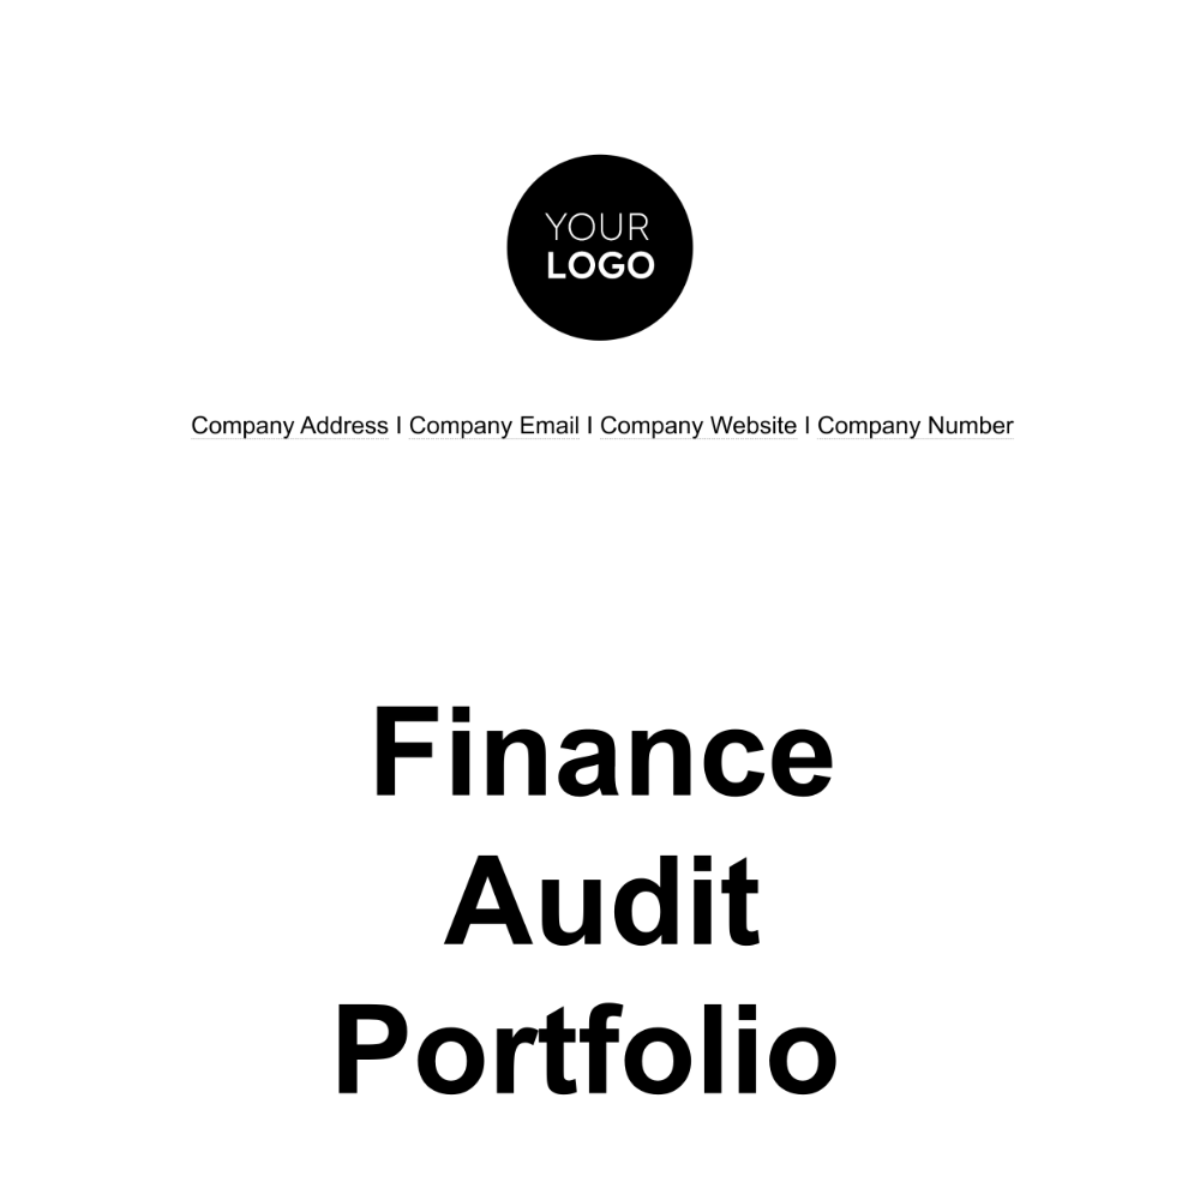 Finance Audit Portfolio Template